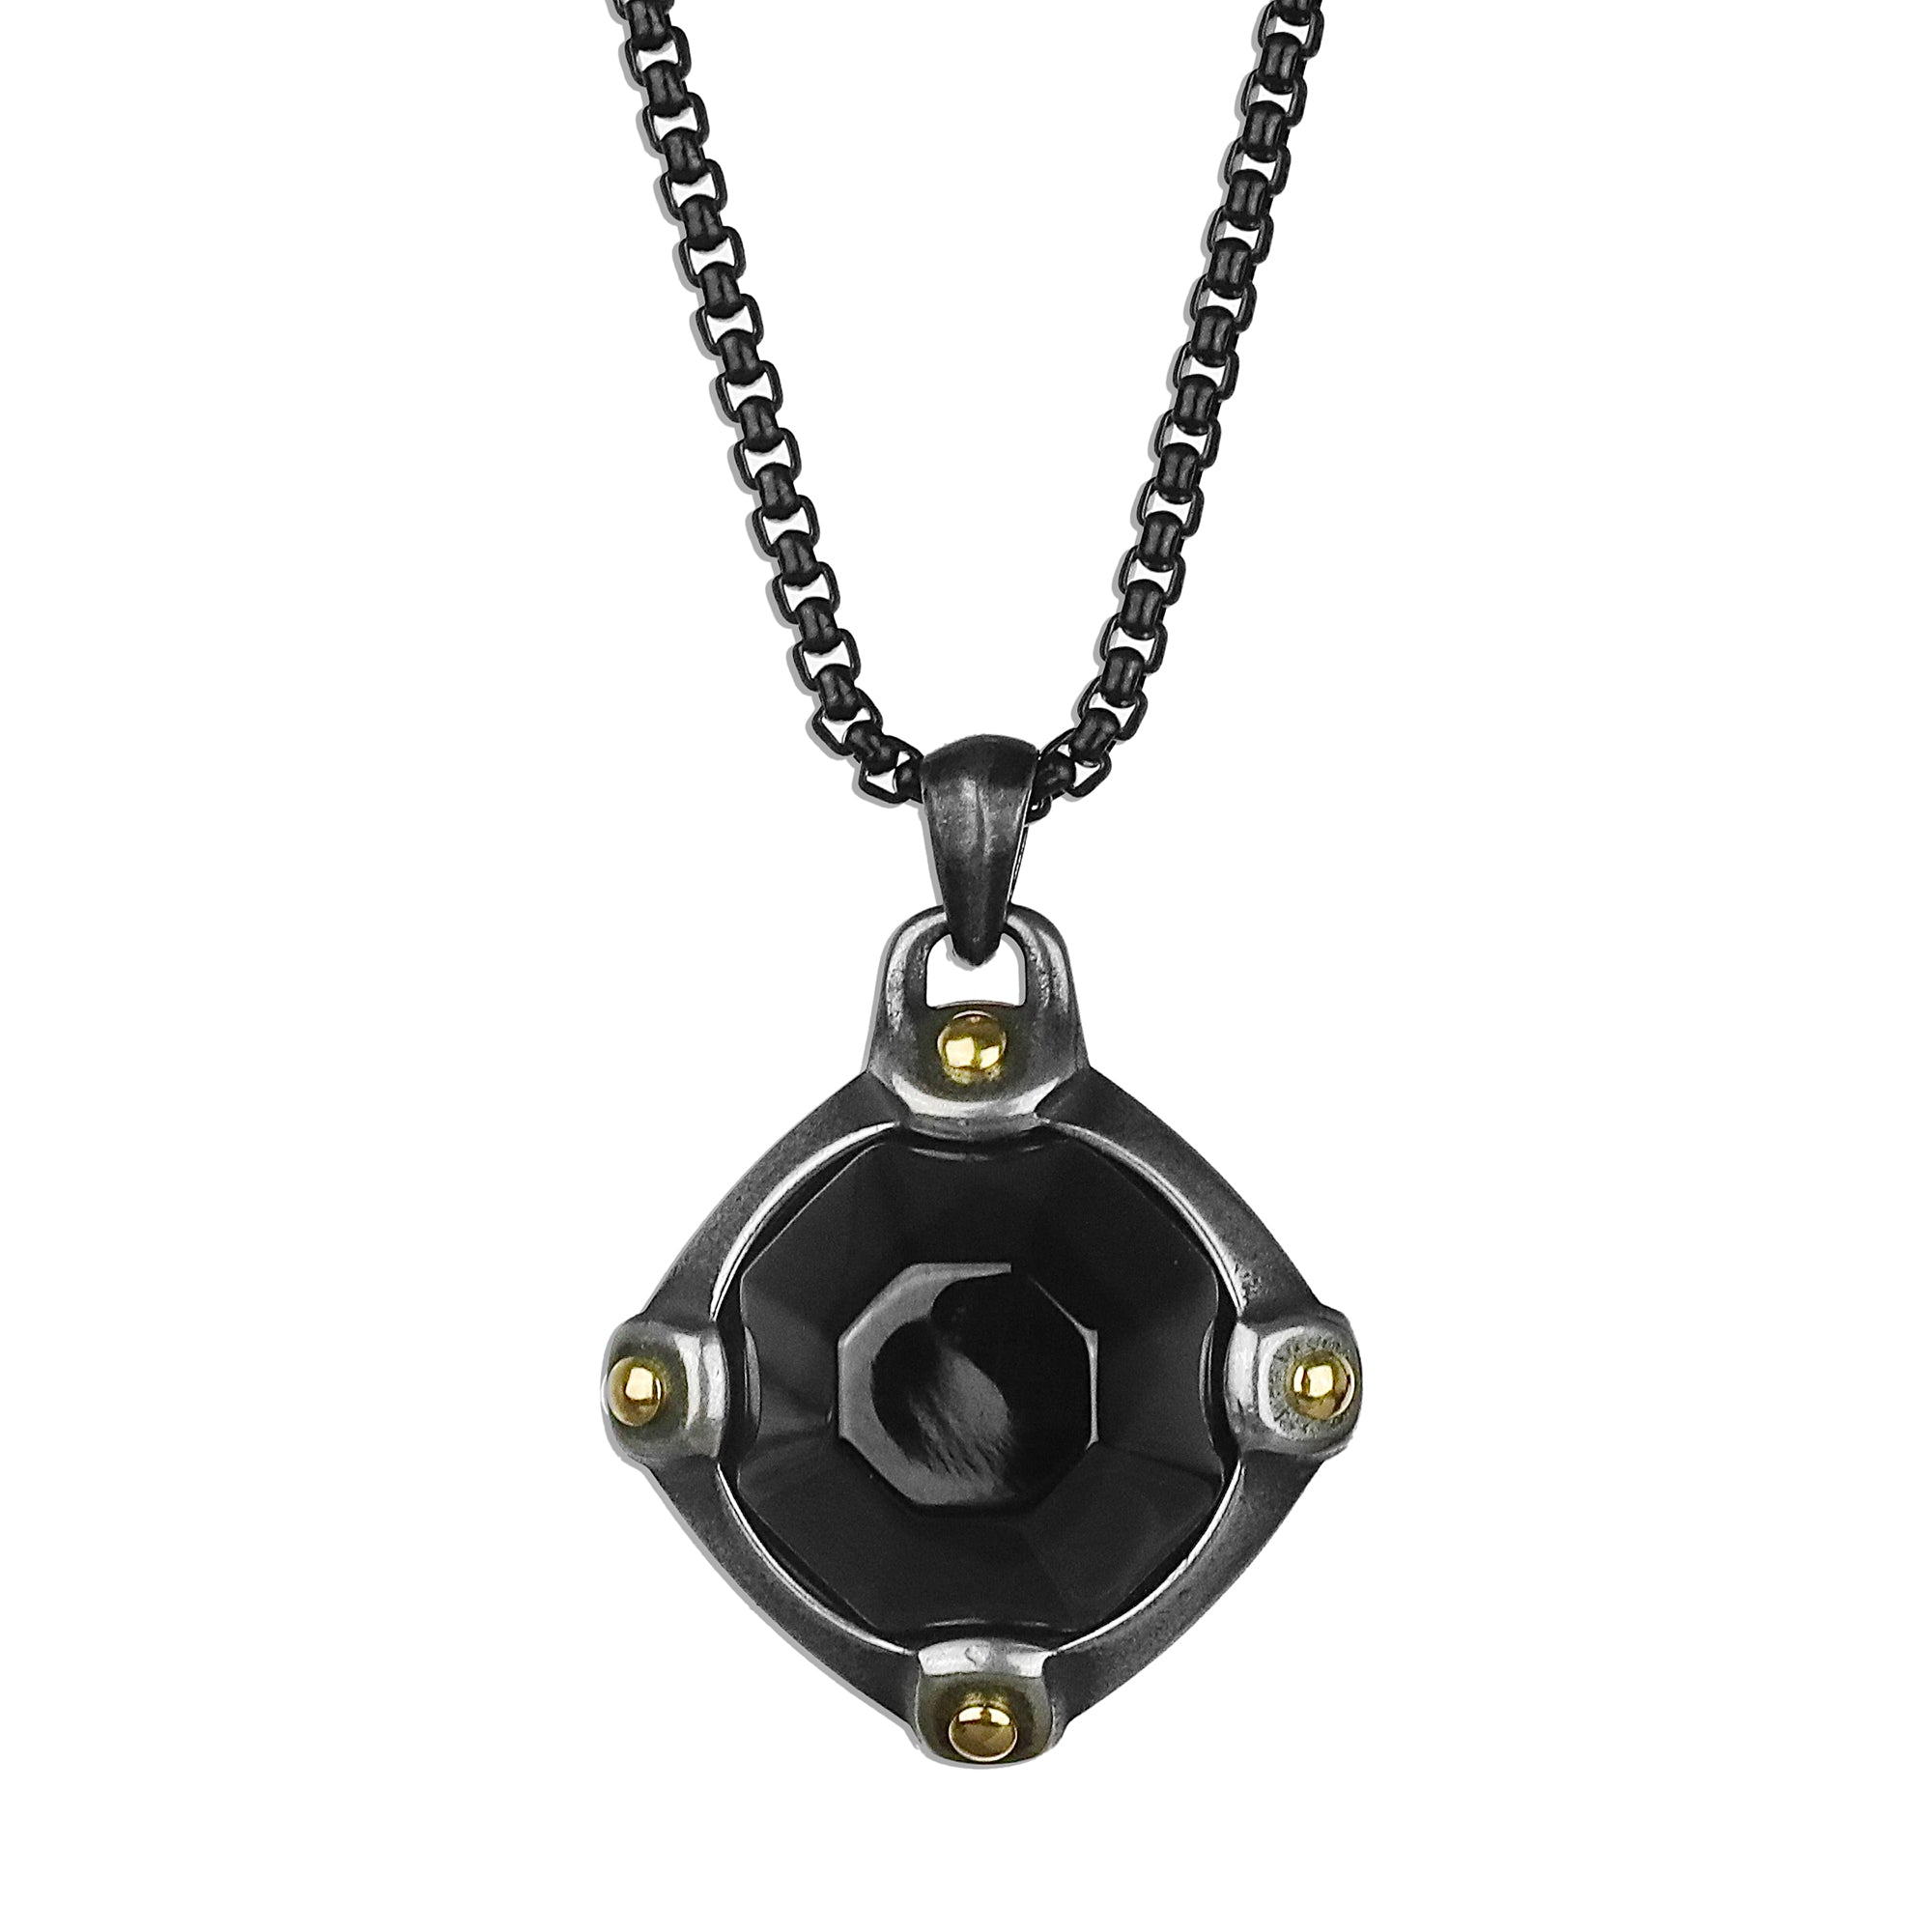 Onyx Stone Necklace - Aged Silver x Black